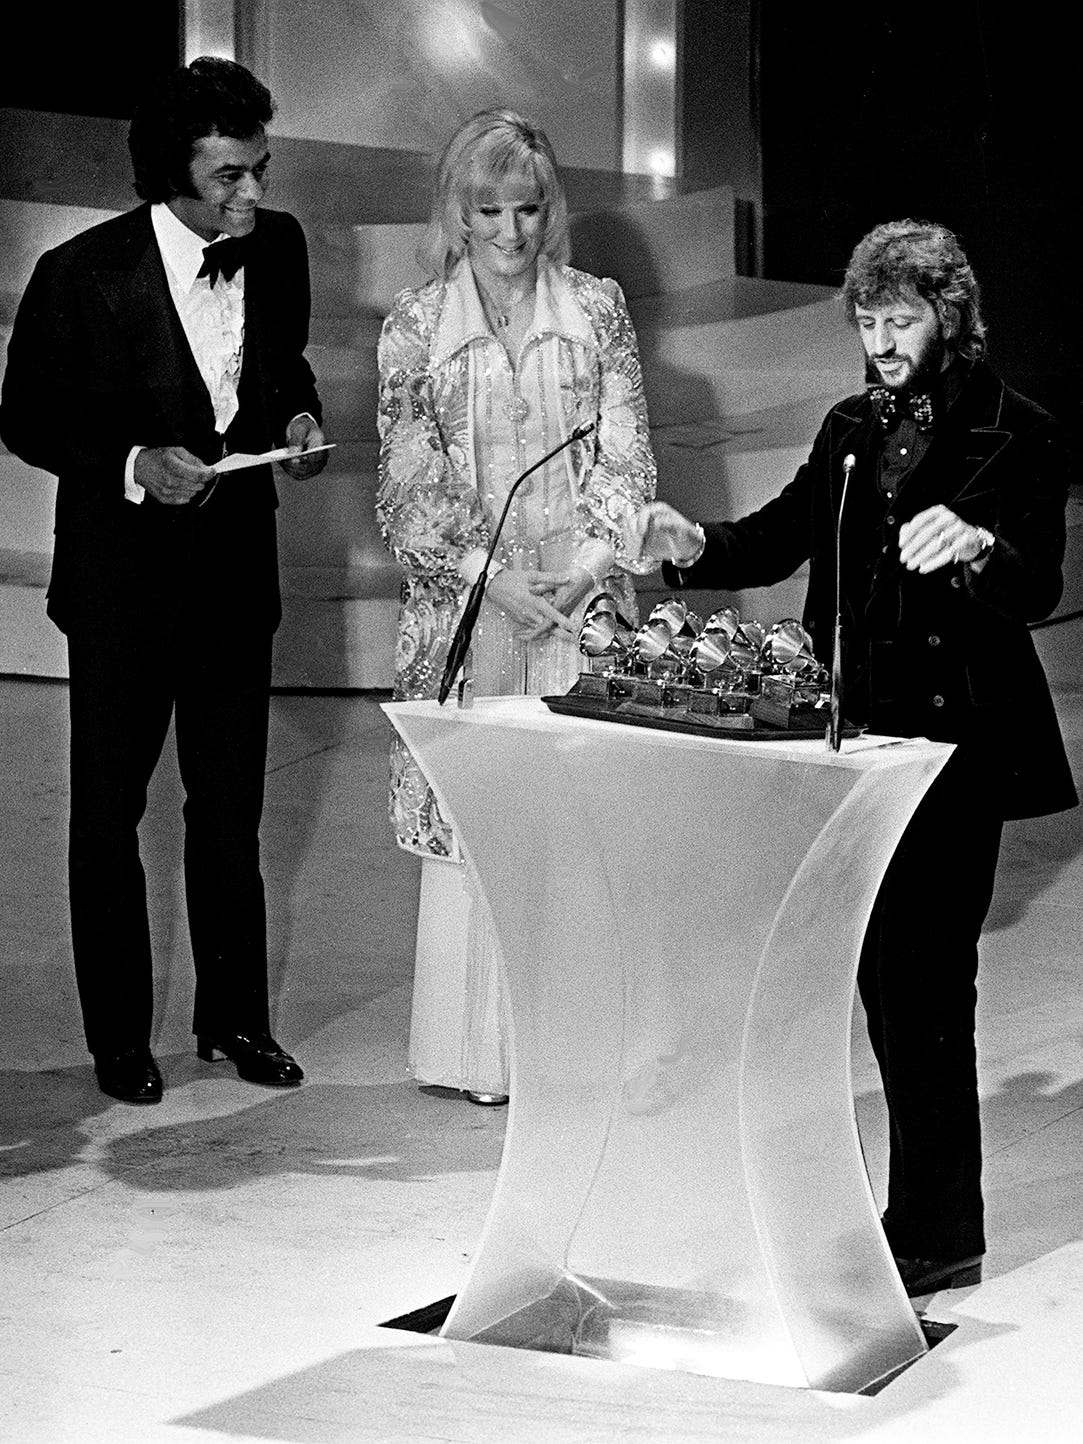 Ringo Starr, right, reaches for the platter of awards